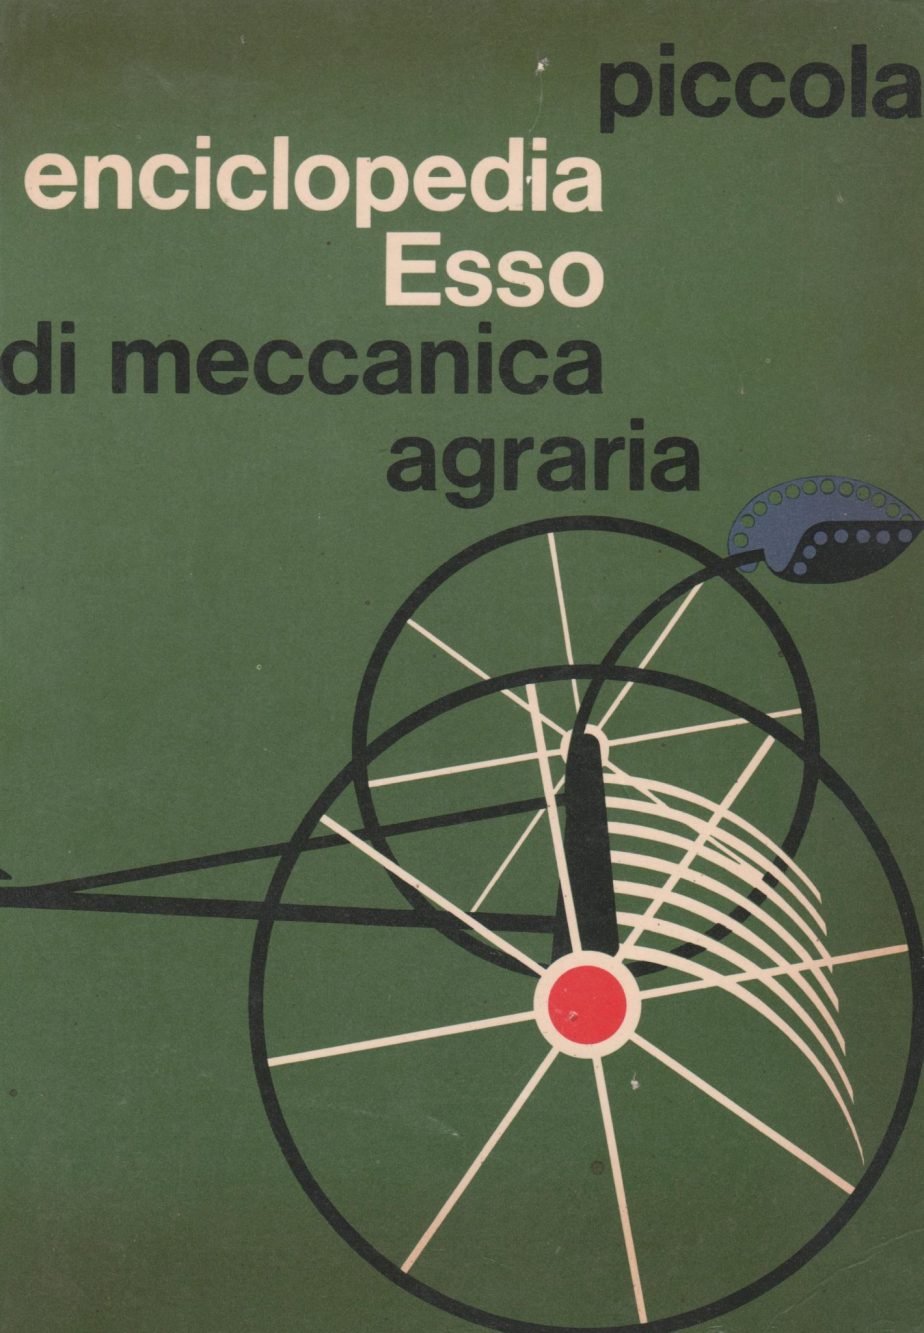 Piccola enciclopedia di meccanica agraria